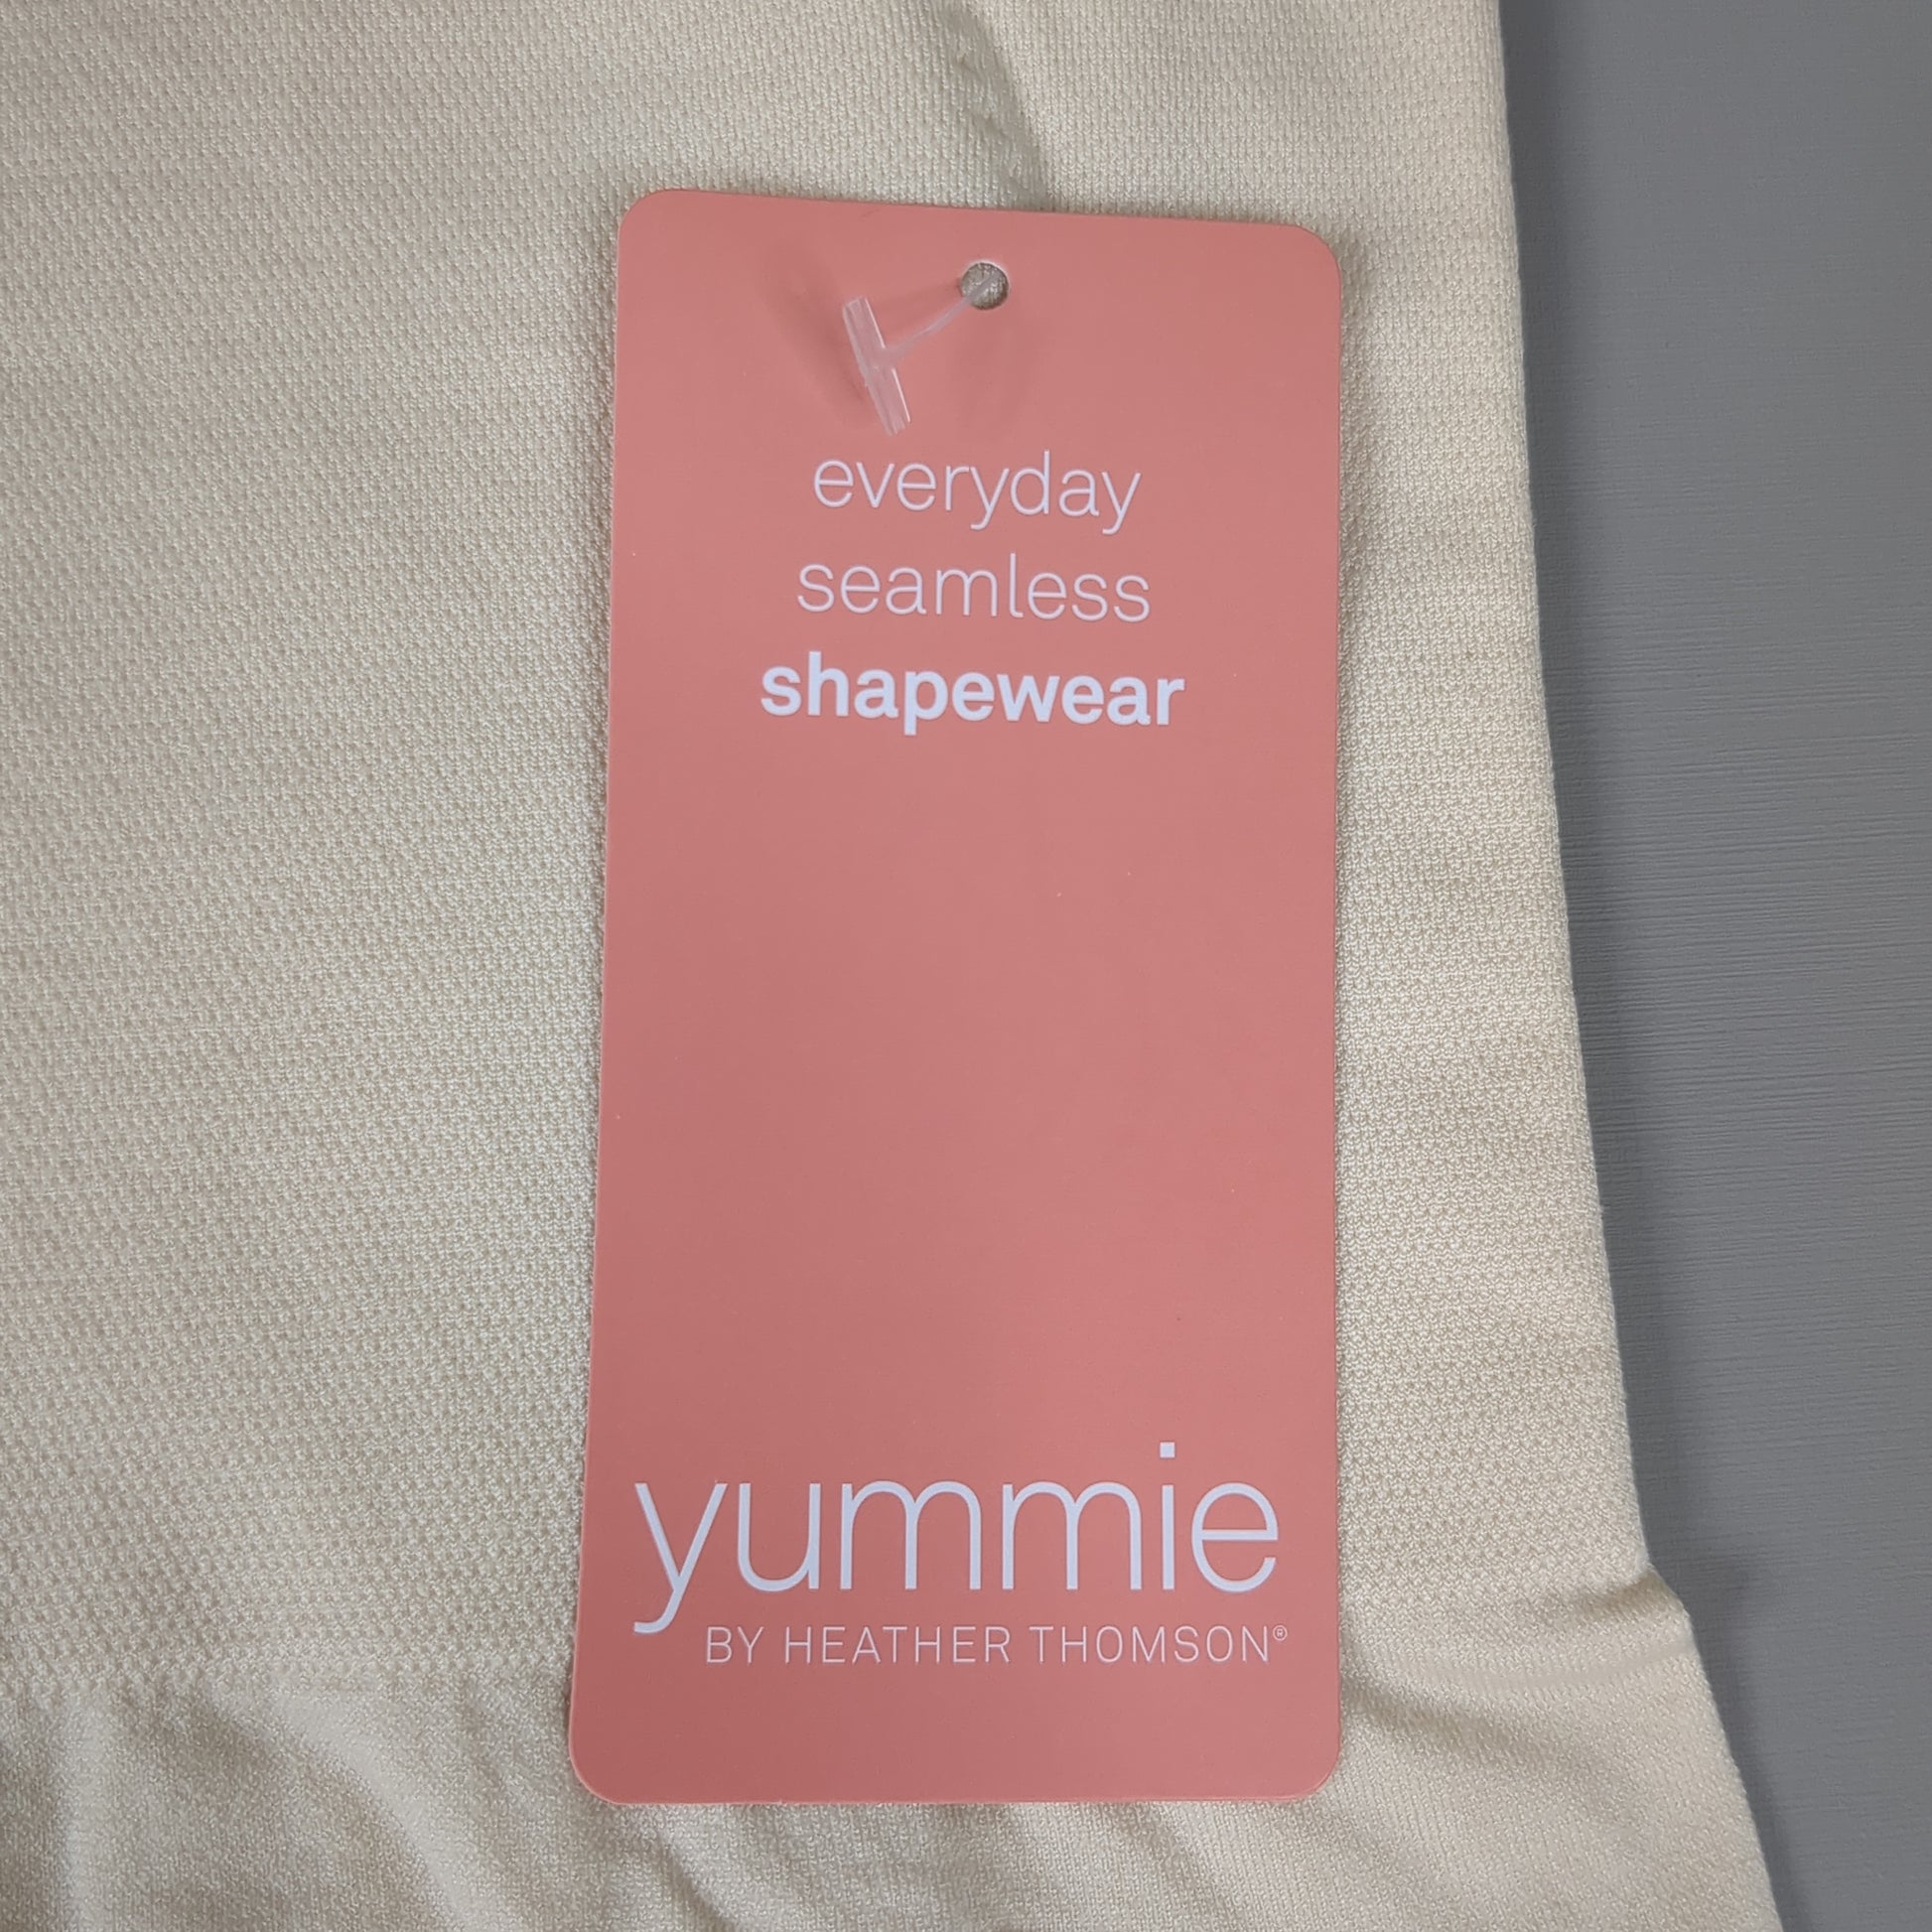 YUMMIE Nylon Brief Women's Underwear Sz L/XL Nude YT6-576 (New)